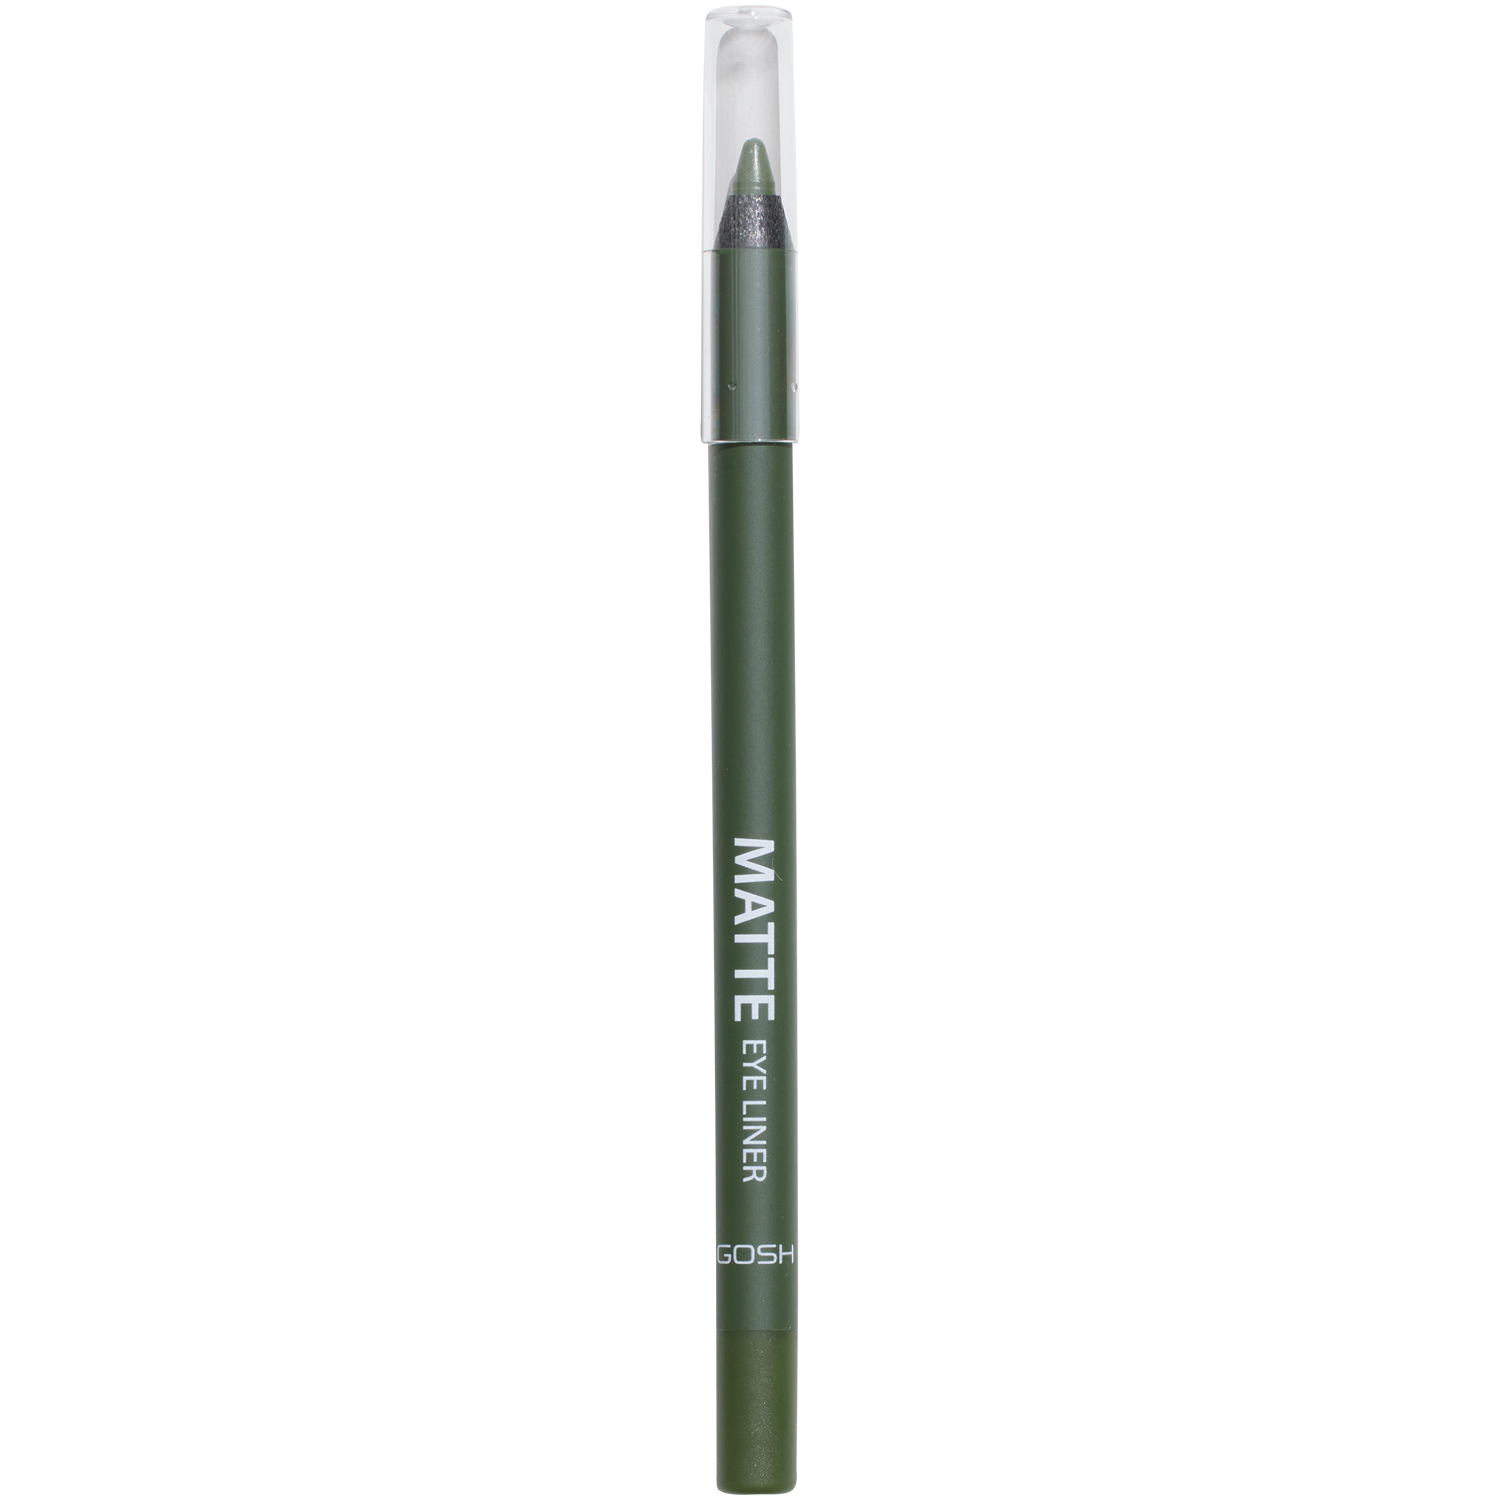 Матовая подводка для глаз 018 оливково-зеленого цвета Gosh Matte, 1,2 гр